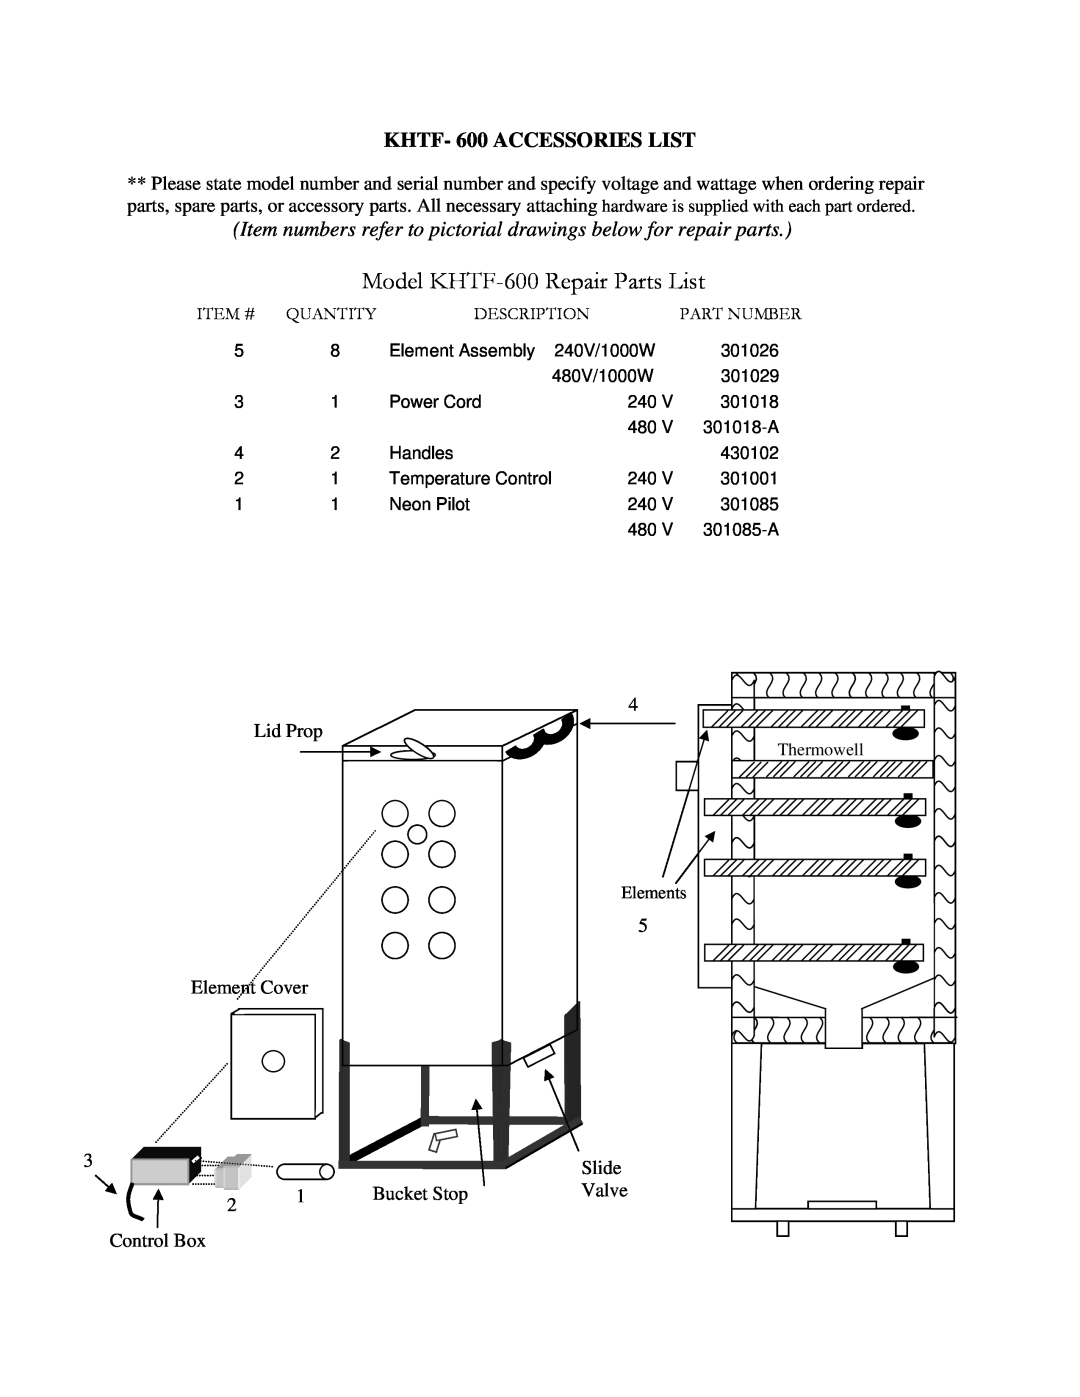 Henkel manual Model KHTF-600Repair Parts List, KHTF- 600 ACCESSORIES LIST 